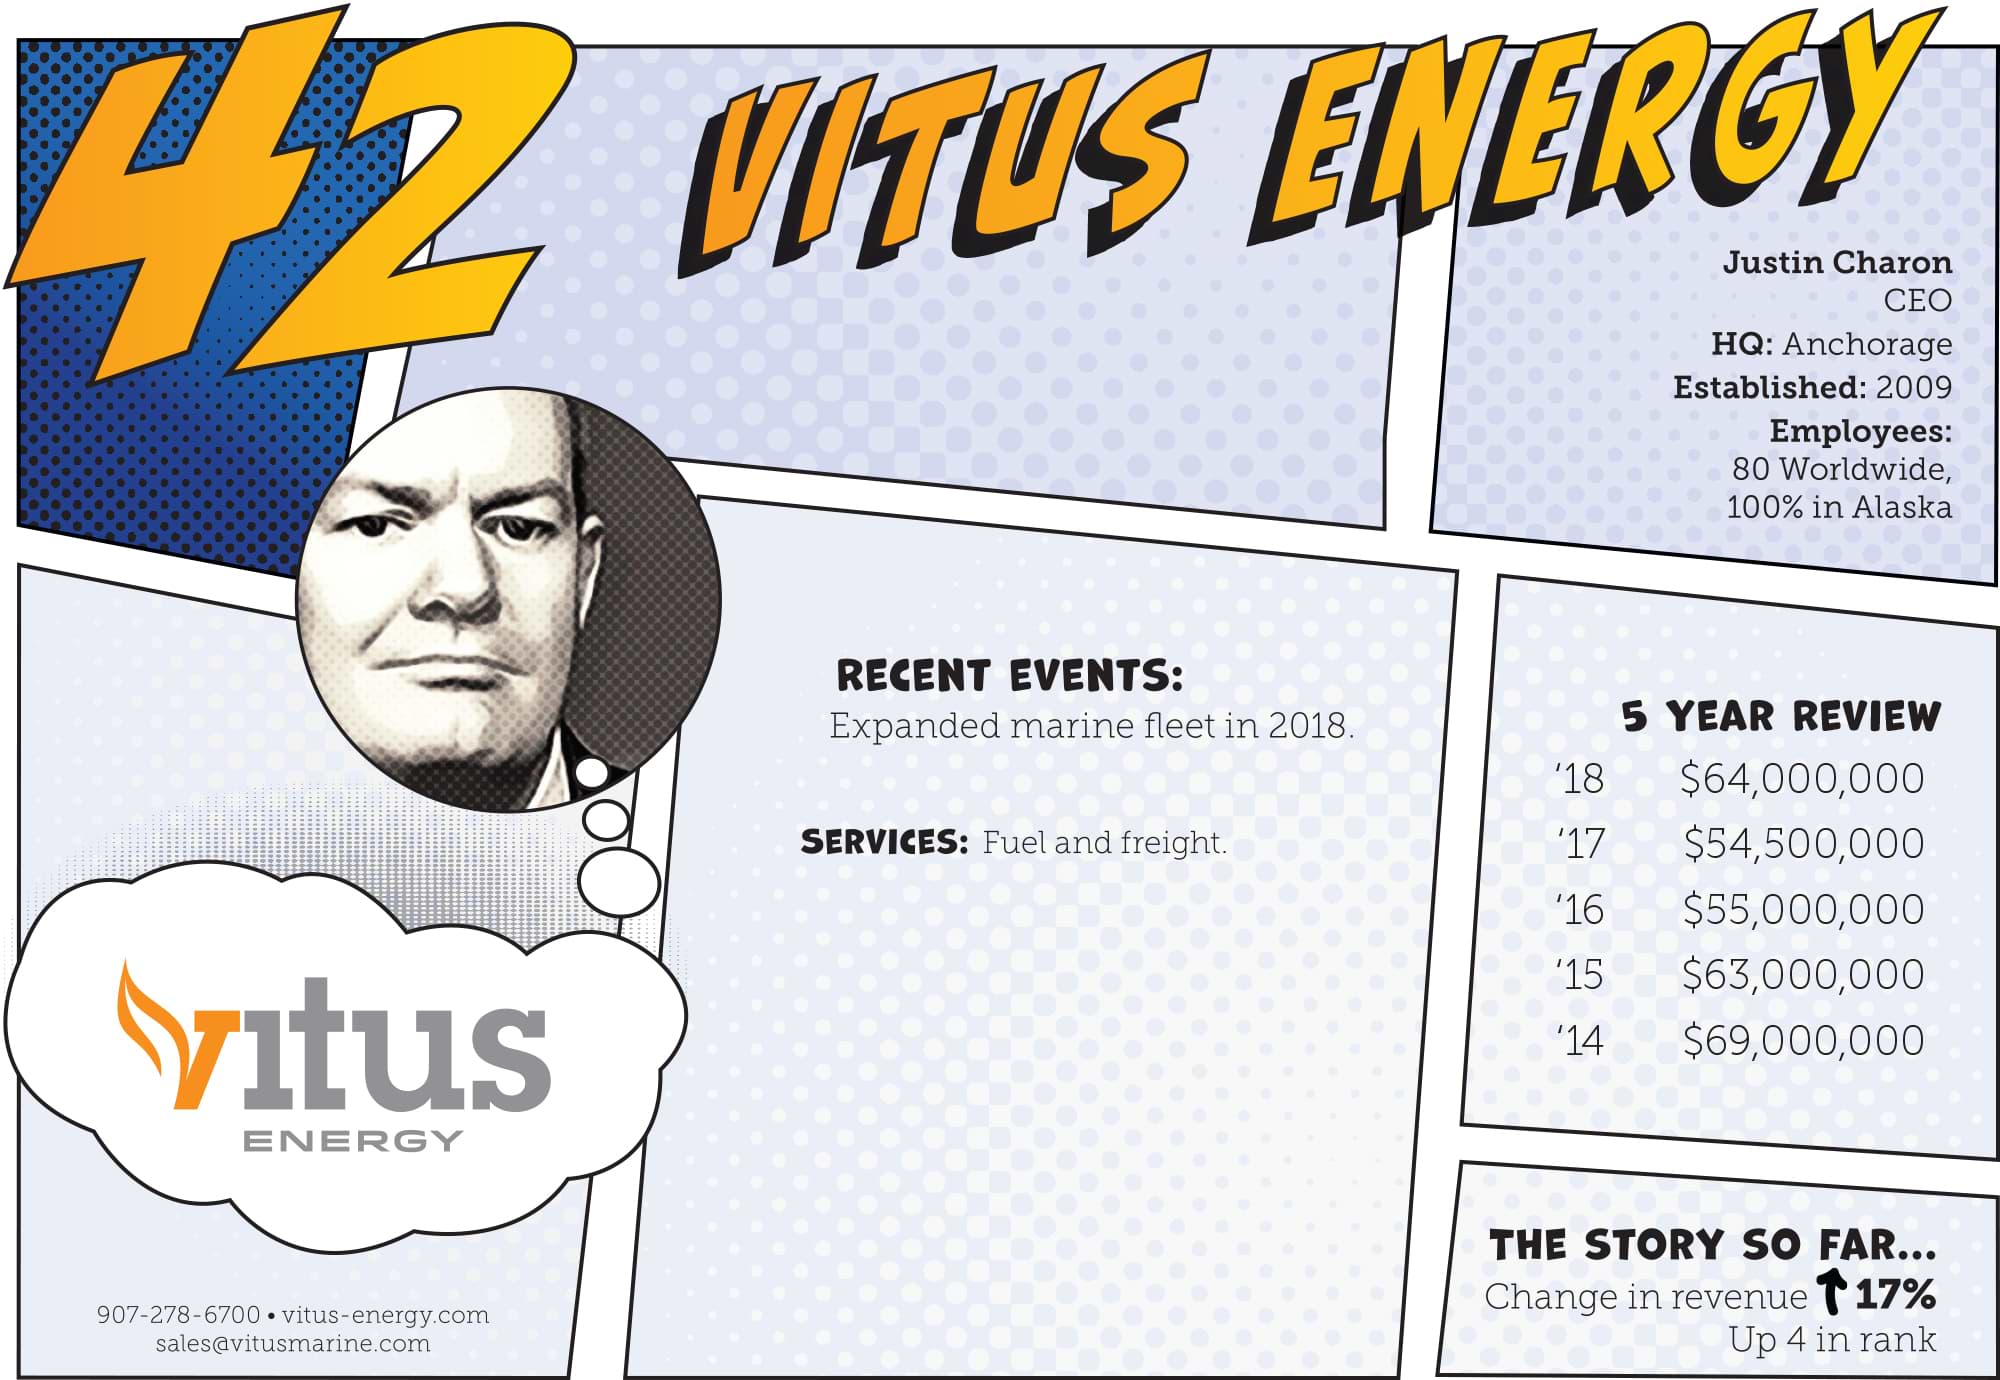 Vitus Energy